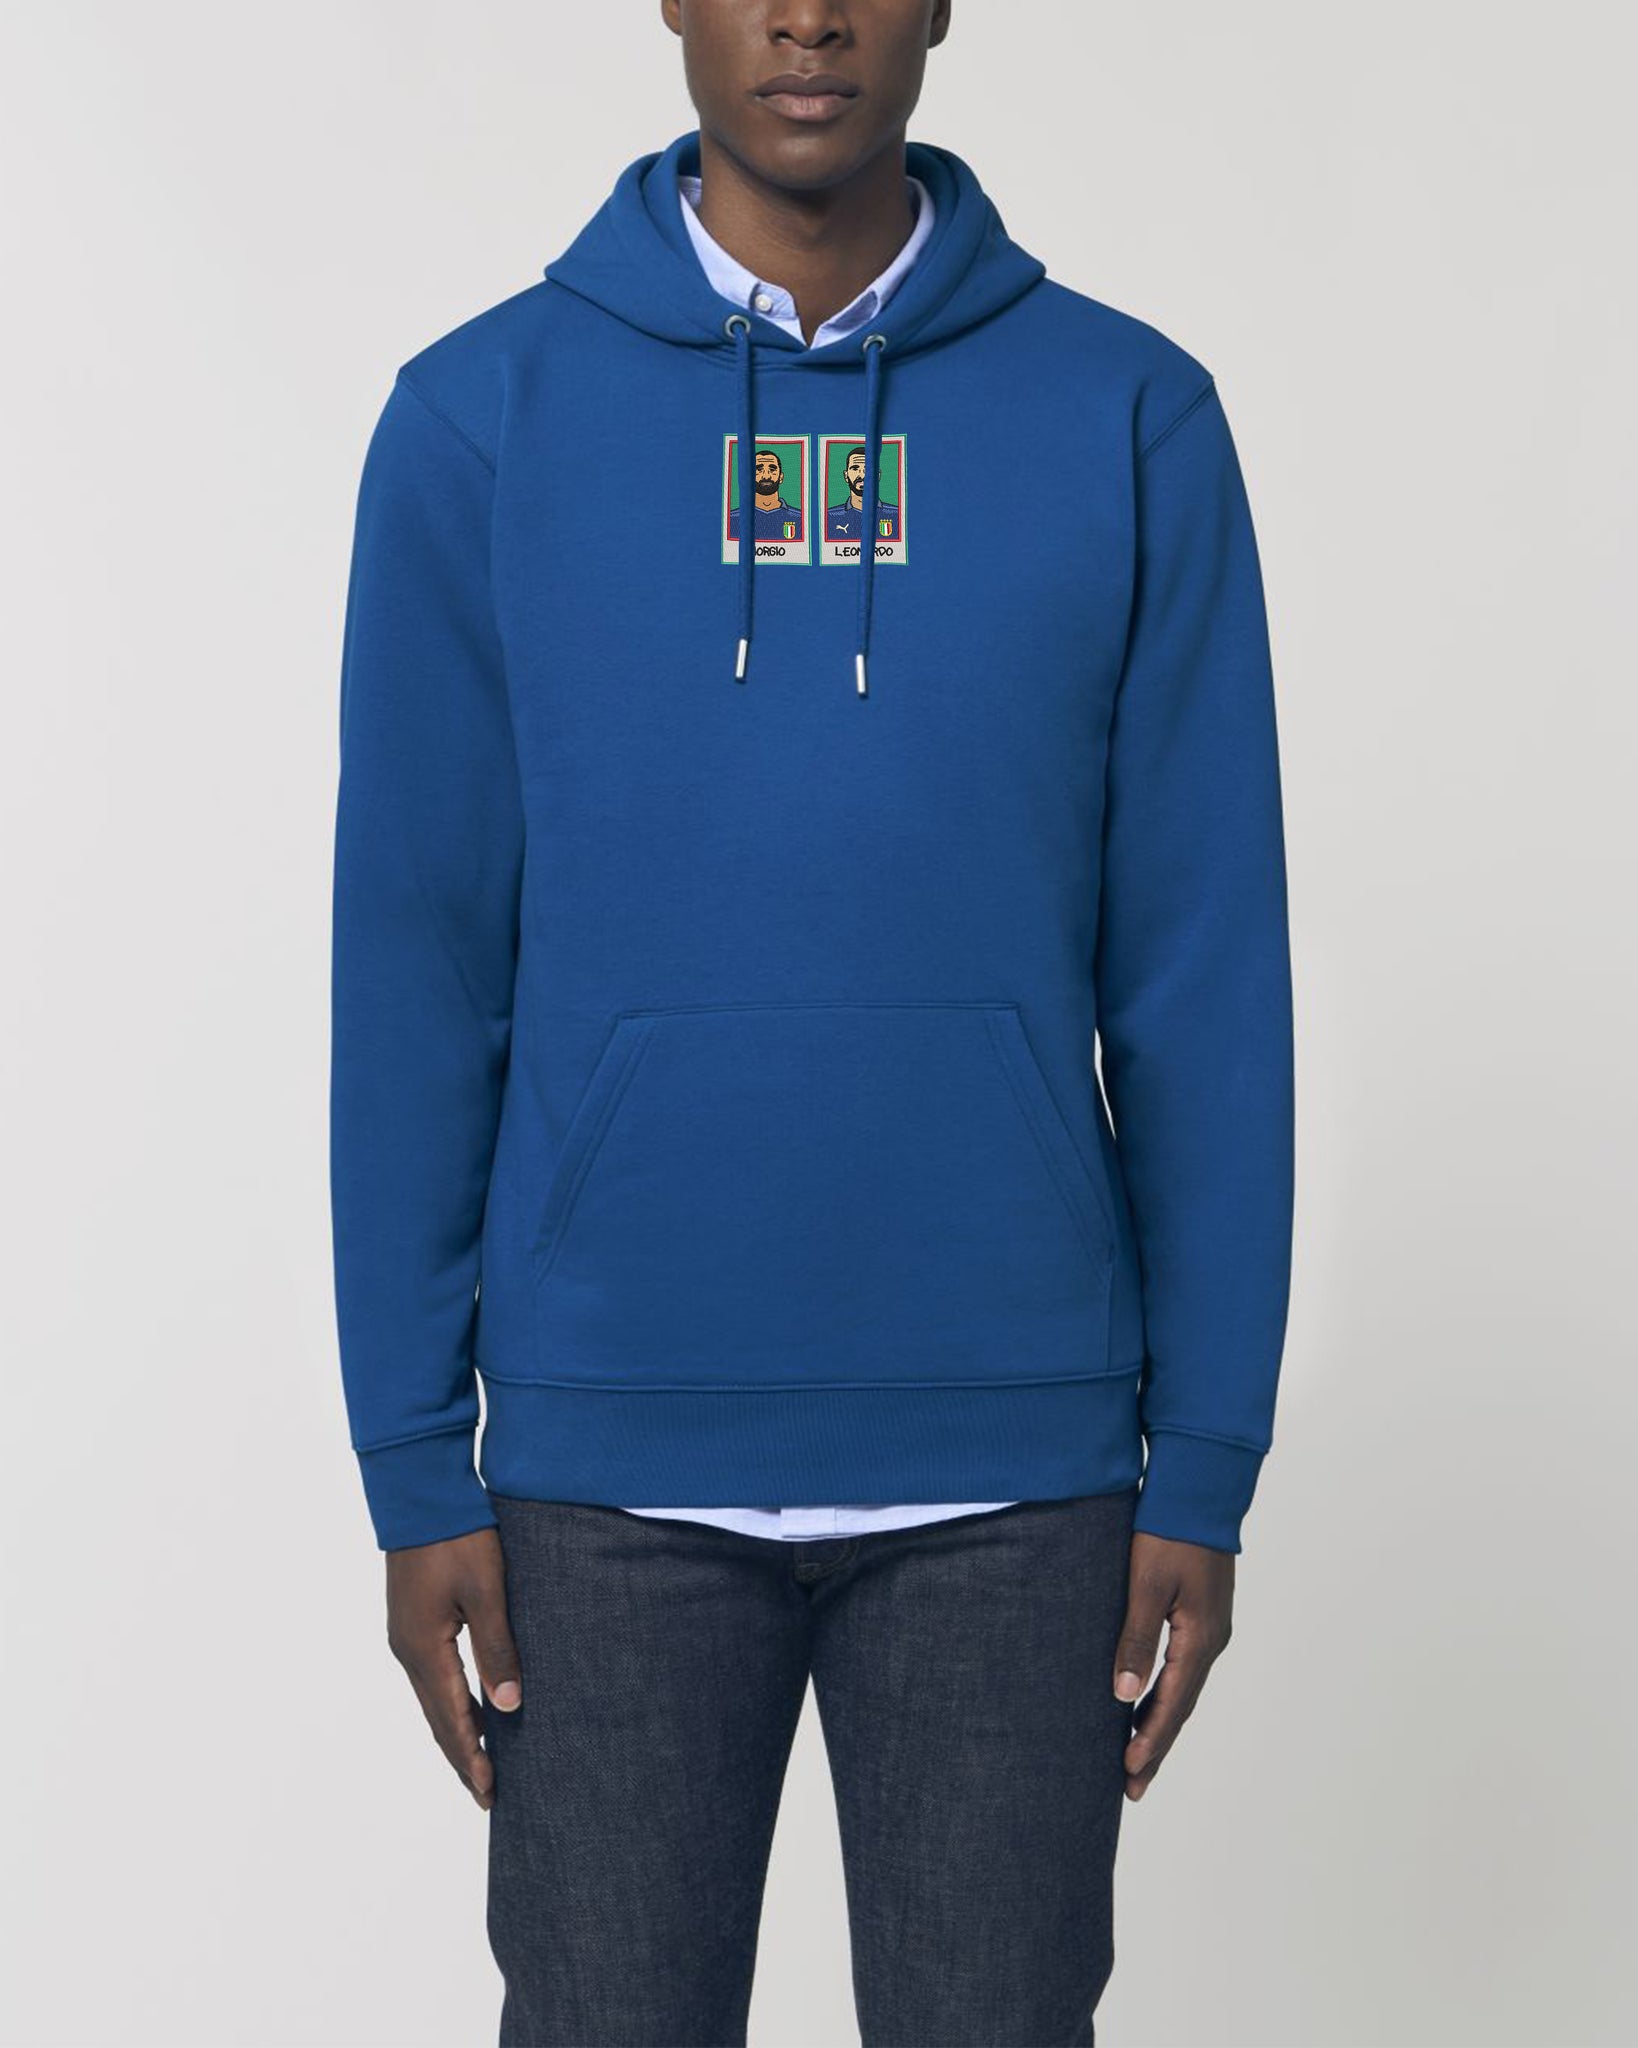 Hooded Sweatshirt Carabinieri 👮‍♂️👮‍♂️ embroidered